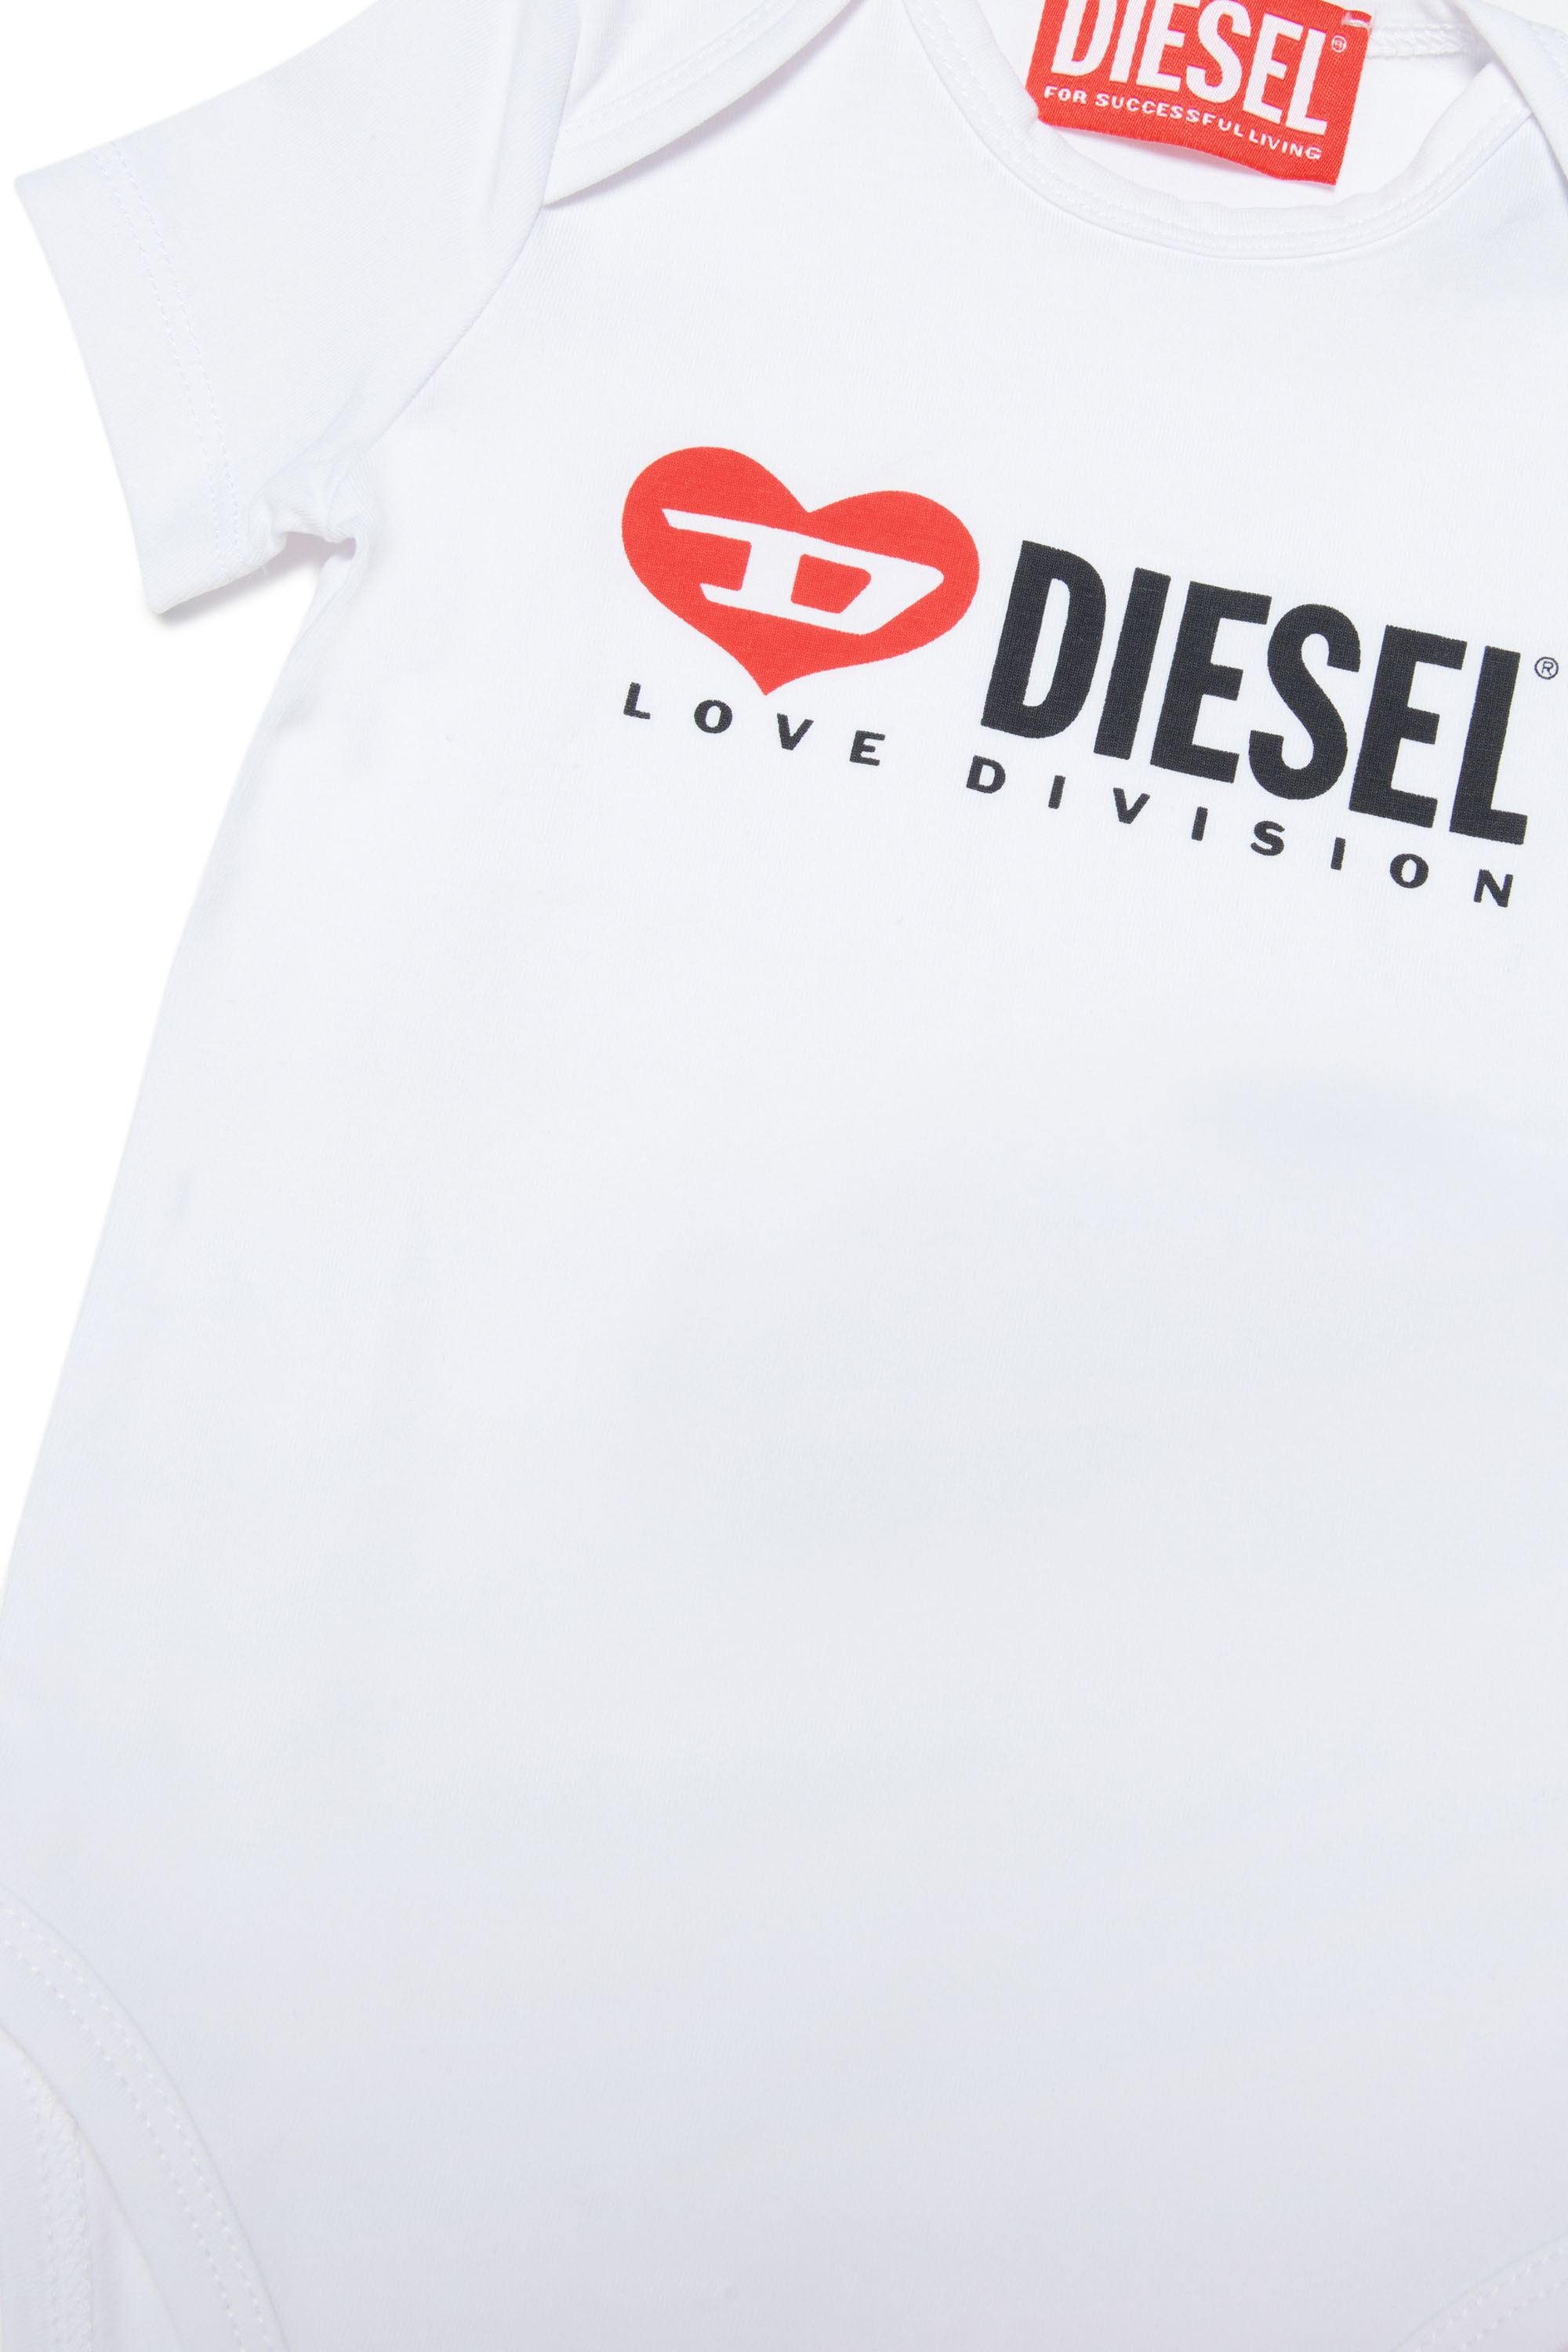 Diesel - ULOVE-NB, Bianco - Image 3